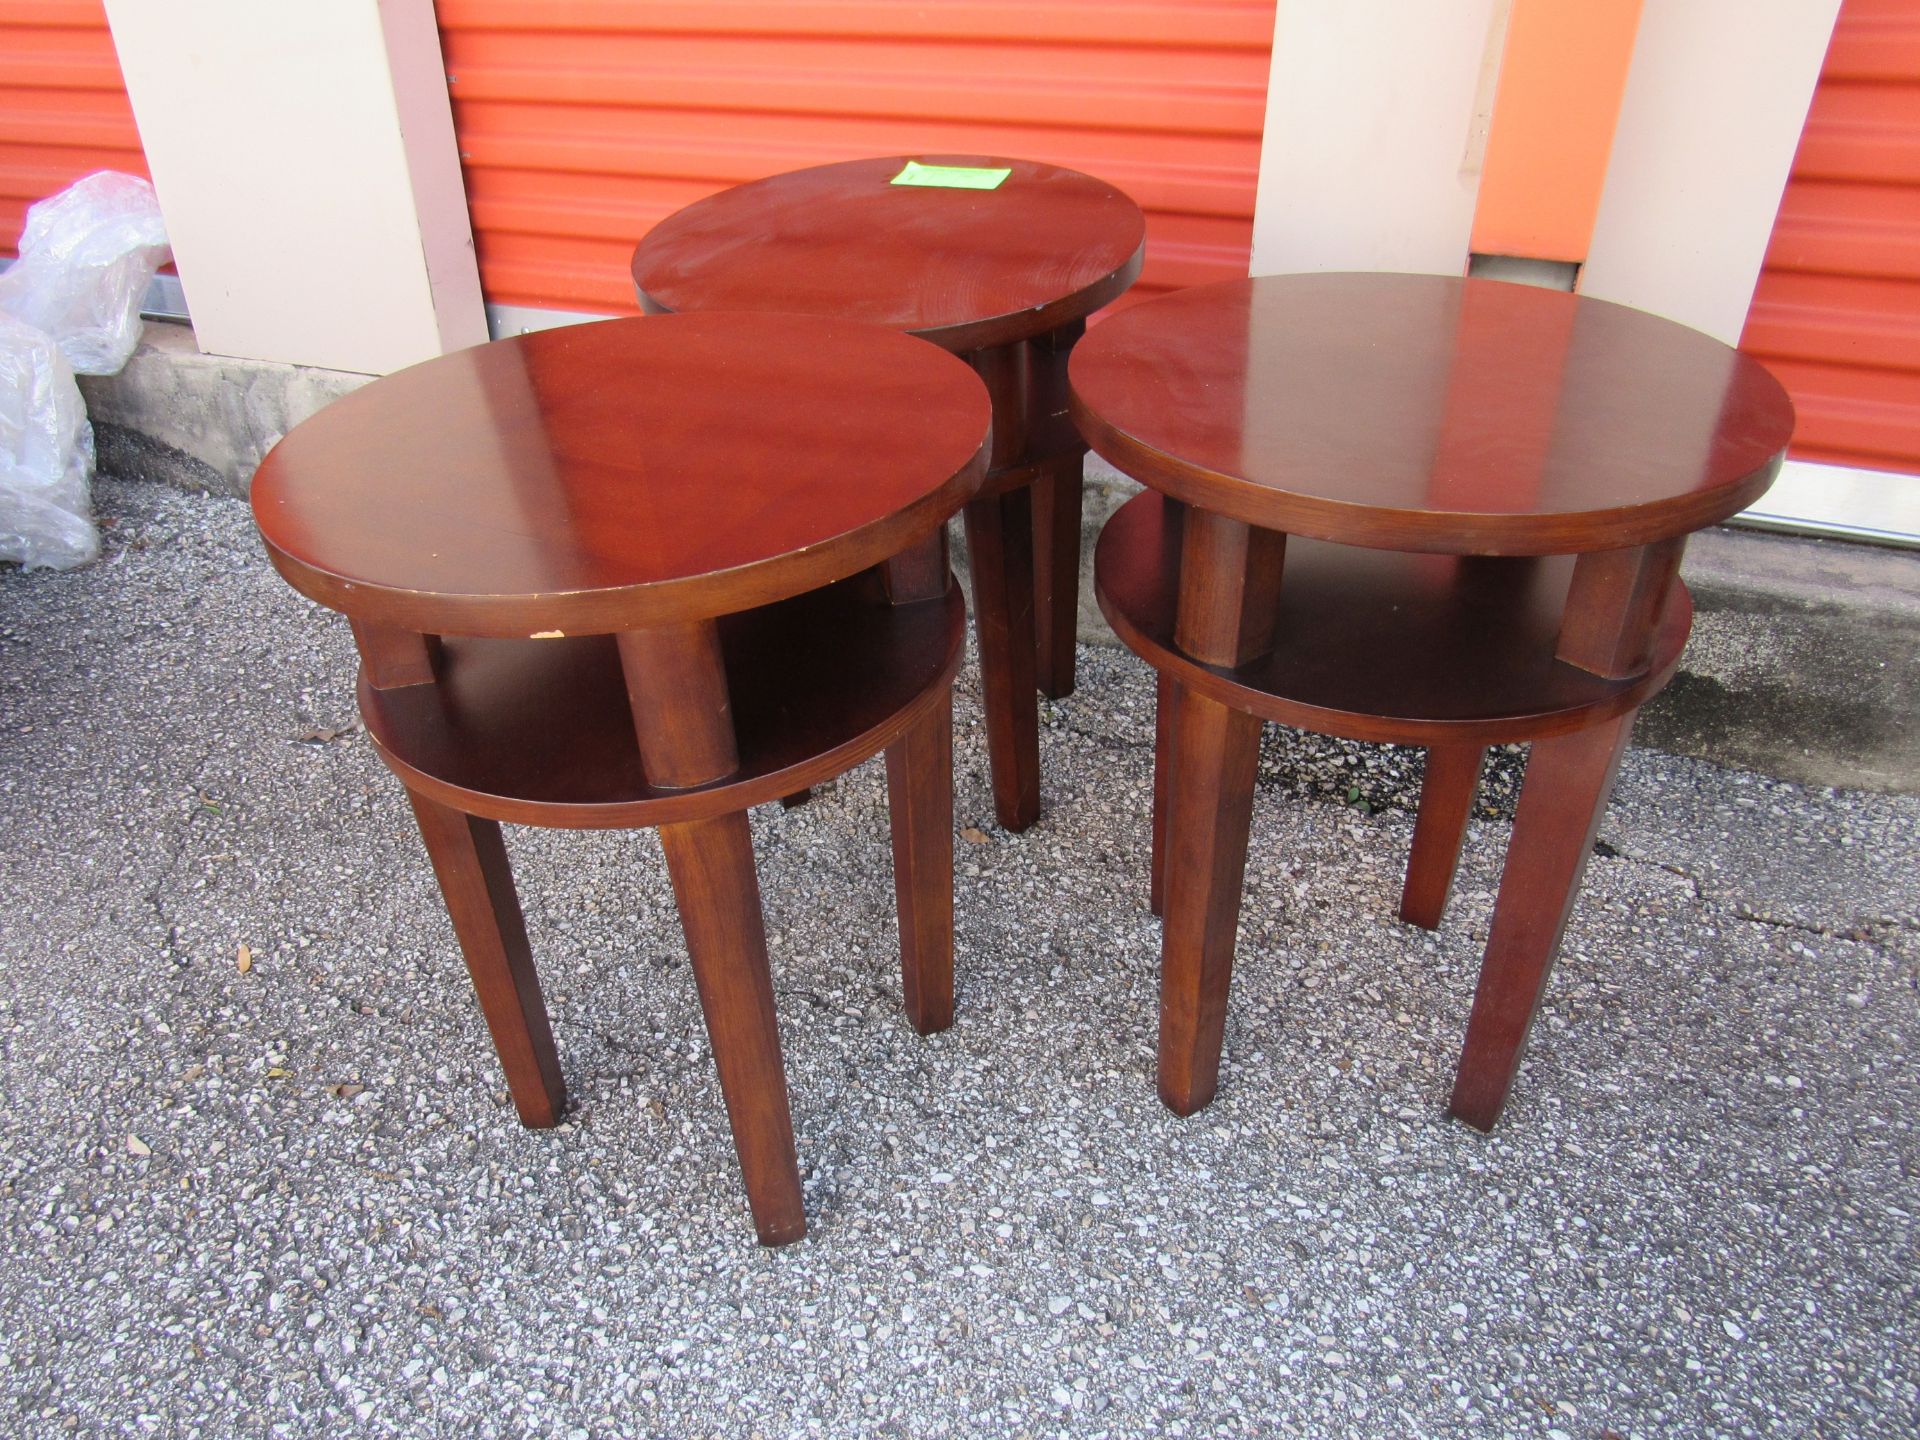 Three 18" round three-pedestal side tables